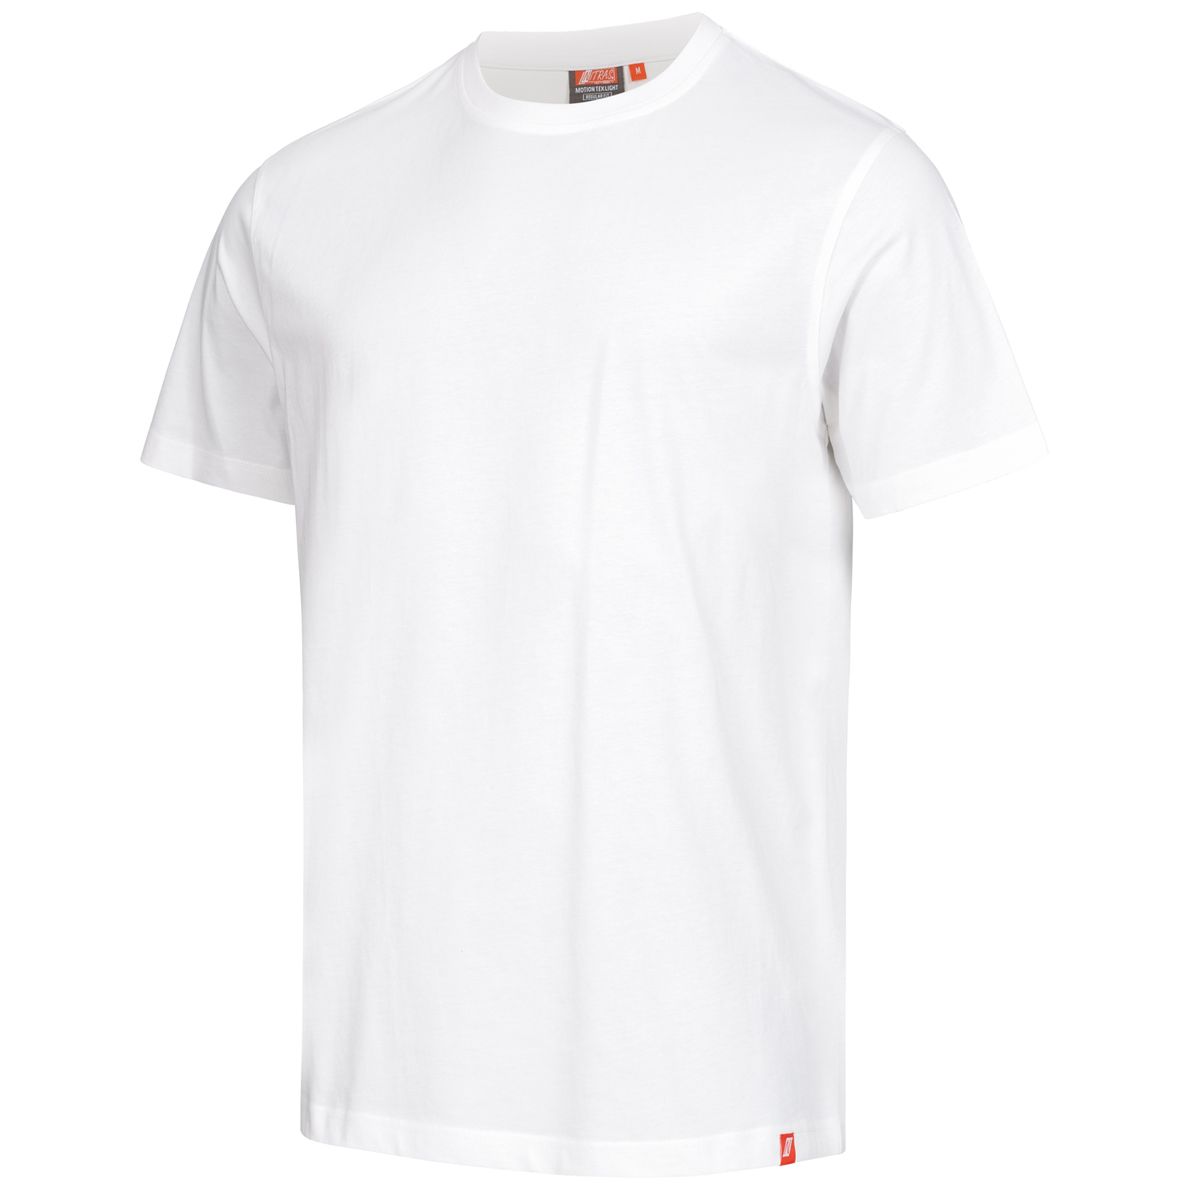 SALE: NITRAS MOTION TEX LIGHT work T-shirt - 100% cotton short sleeve shirt - for work - White - S